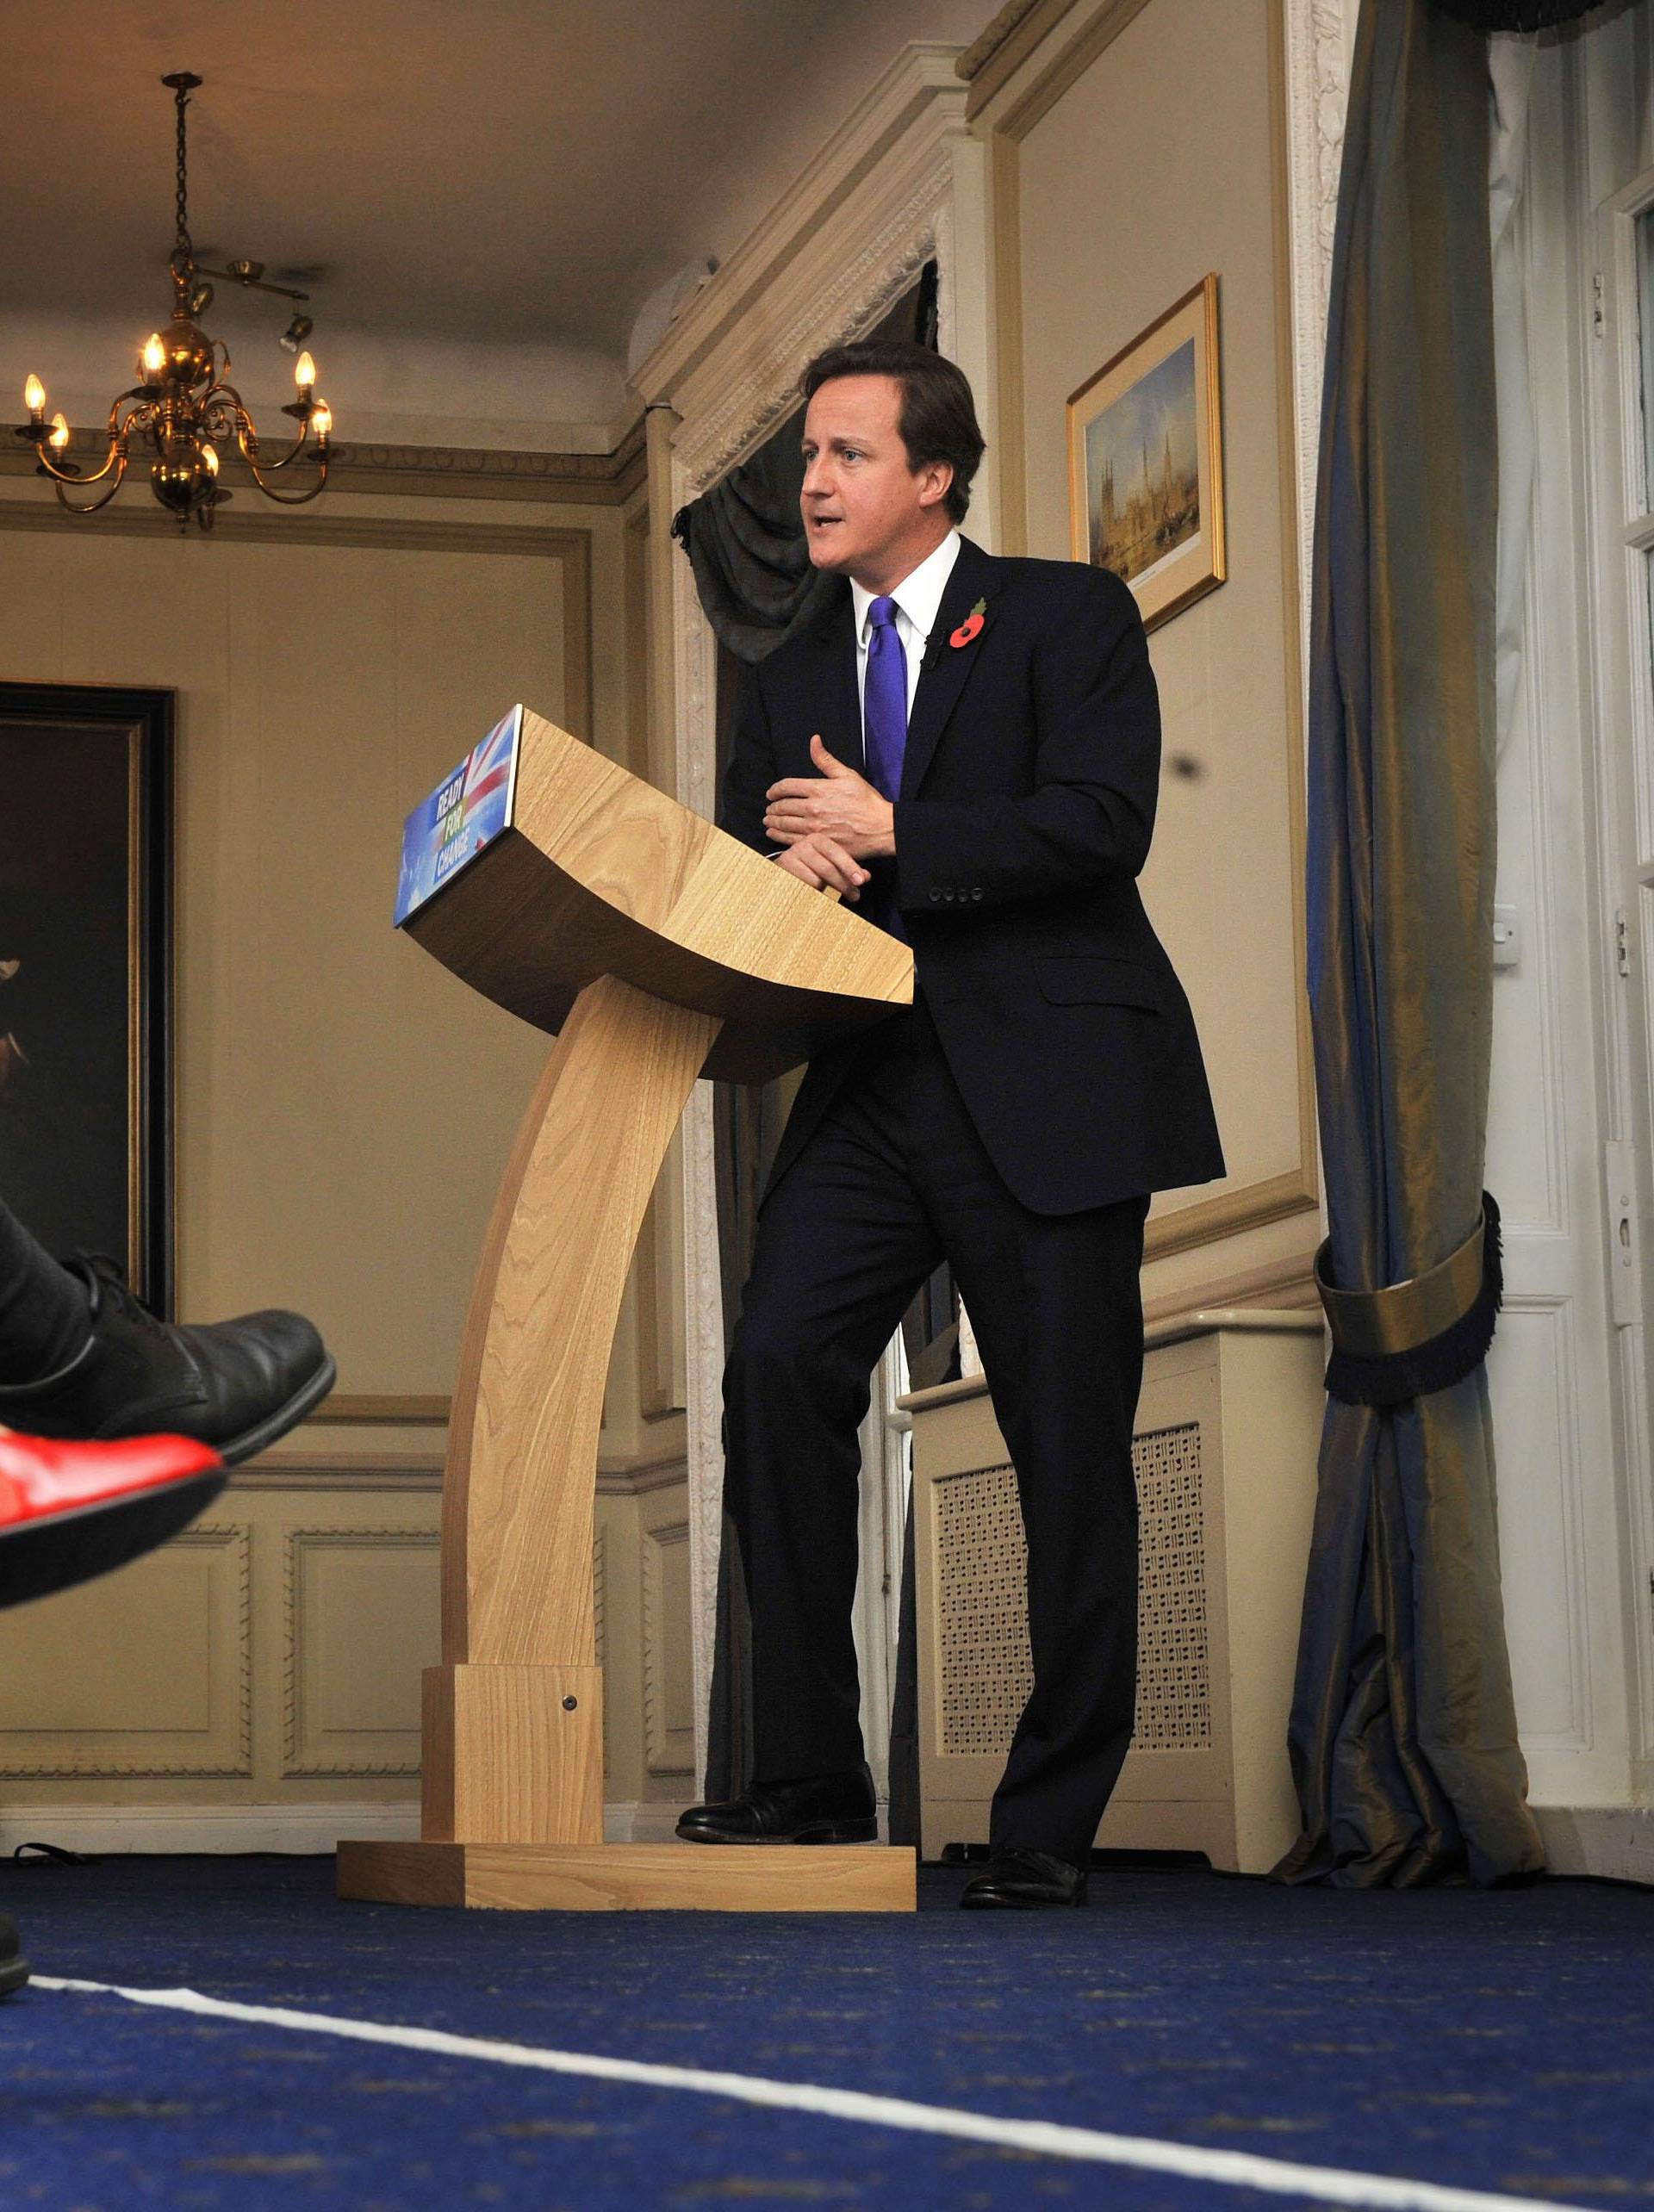 David Cameron press conference